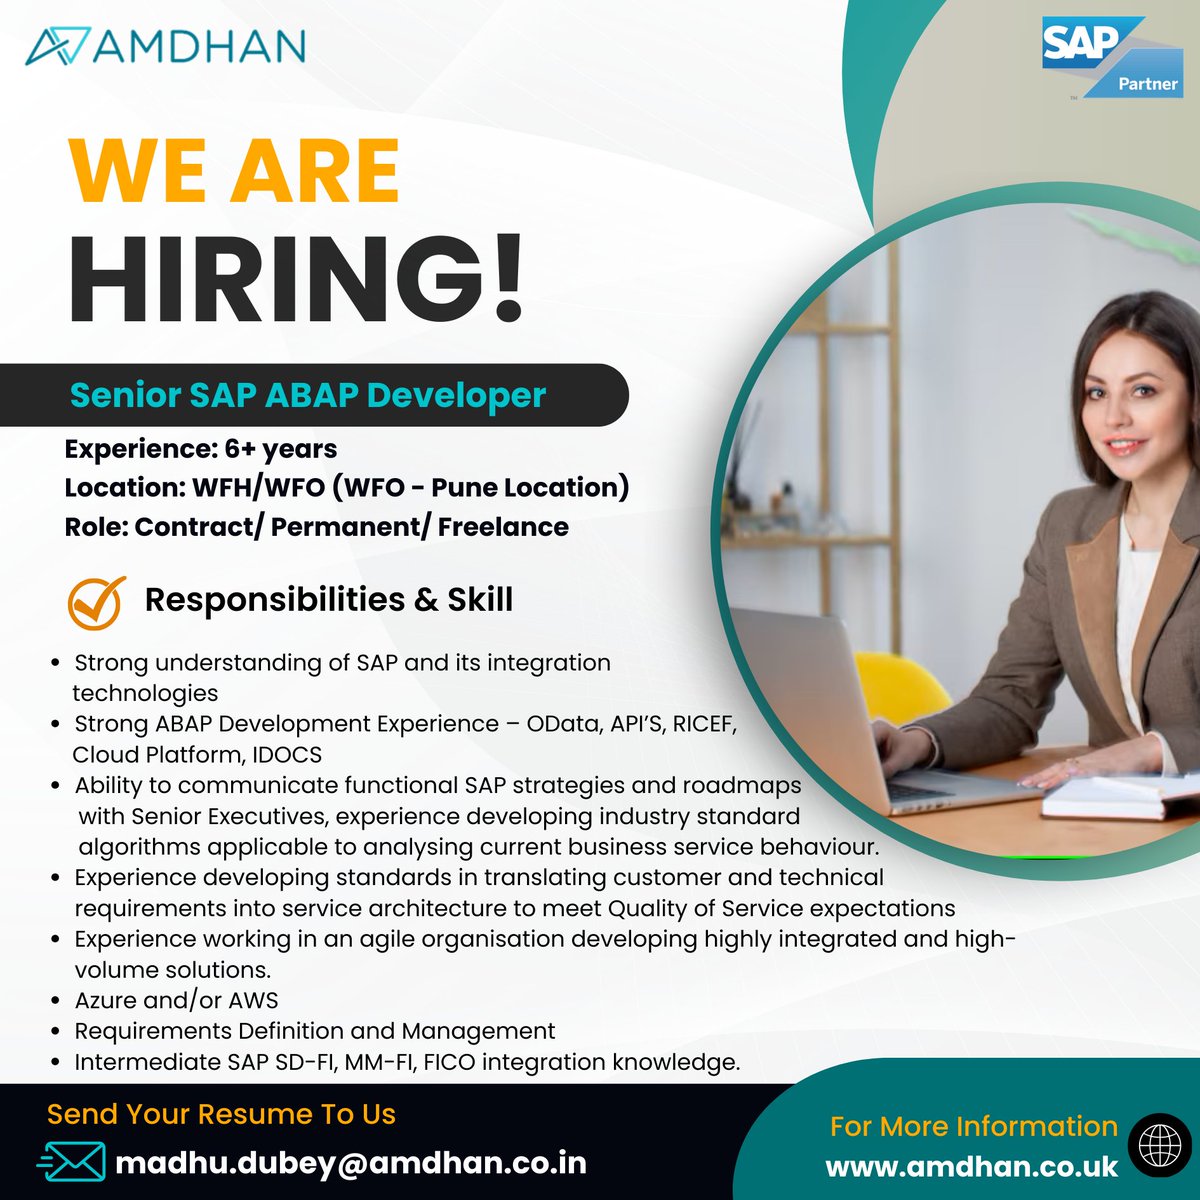 We Are Hiring.

𝐏𝐨𝐬𝐢𝐭𝐢𝐨𝐧: Senior SAP ABAP Developer

𝐀𝐩𝐩𝐥𝐲 𝐍𝐨𝐰 𝐎𝐧 - madhu.dubey@amdhan.co.in

#sapabapconsultant #abapconsultant #sapconsultant #abapdeveloper #sapabap #abap #vacancy #hiring #sapjobs #saphiring #sapjob #recruitment #amdhan #sap #itjobs